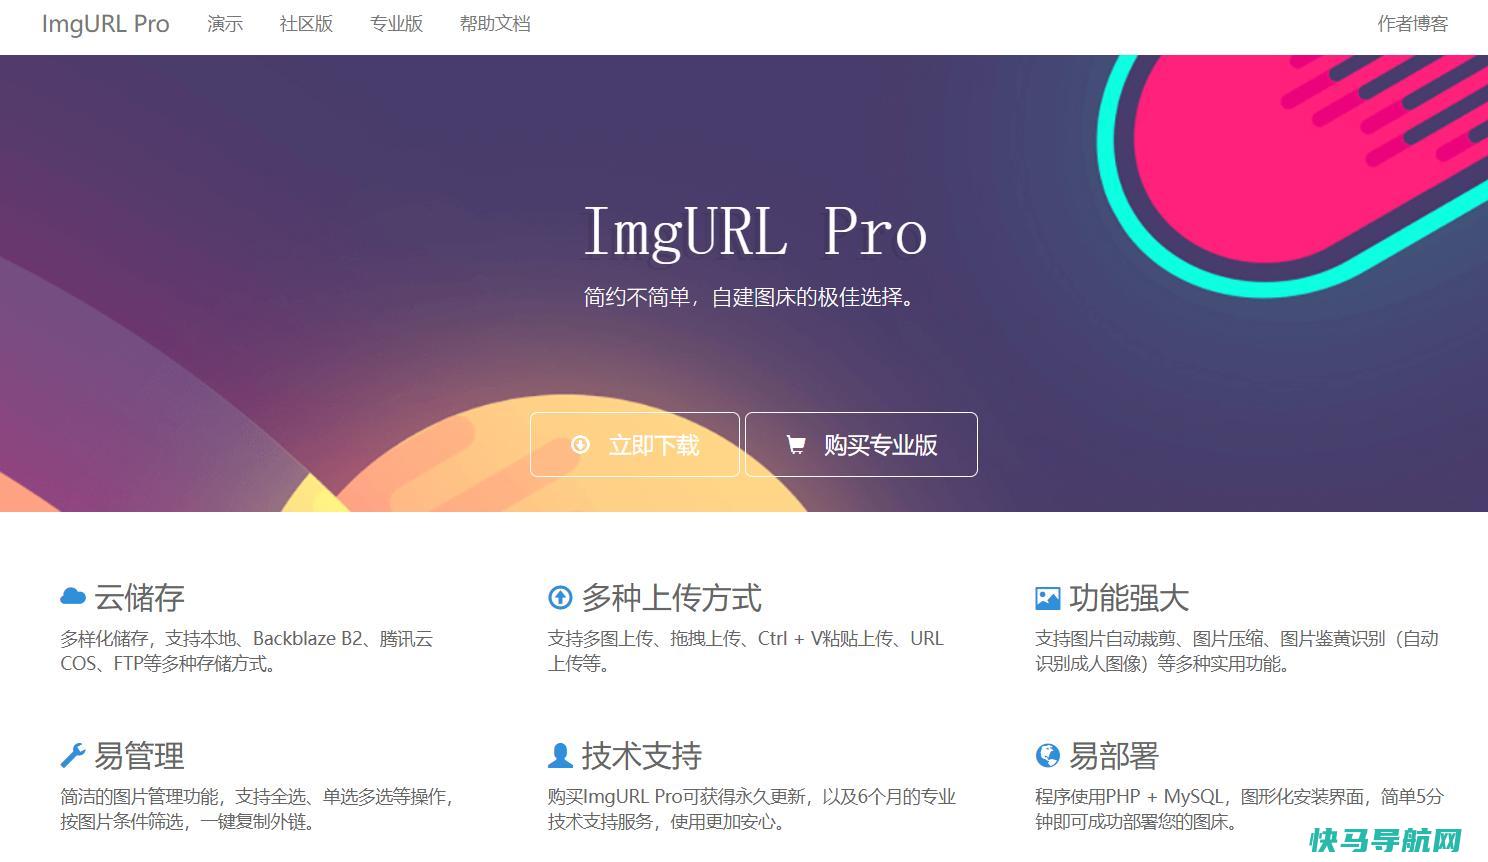 ImgURL Pro专业版图床程序2.2.x更新，已对接支付功能